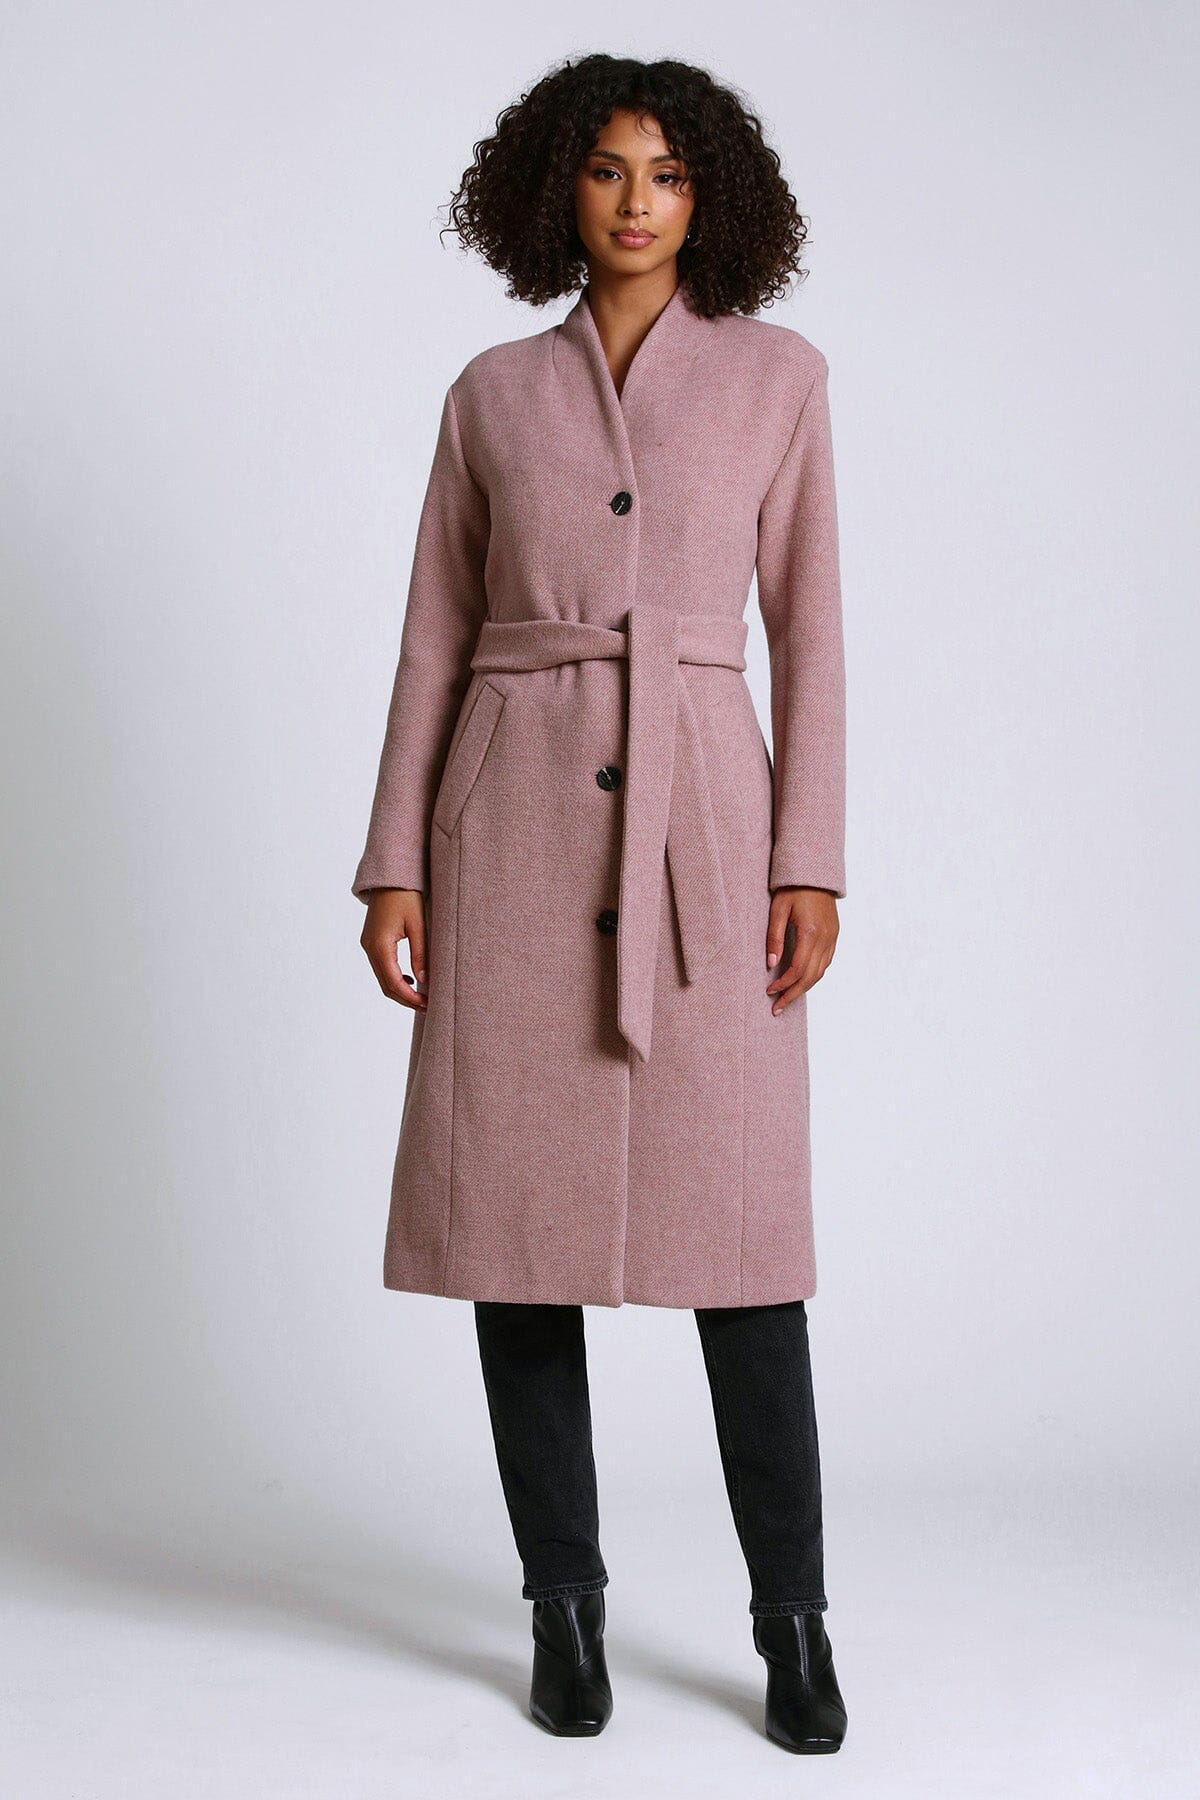 Portabella pink wool blend overlap collar belted tailored long coat jacket 